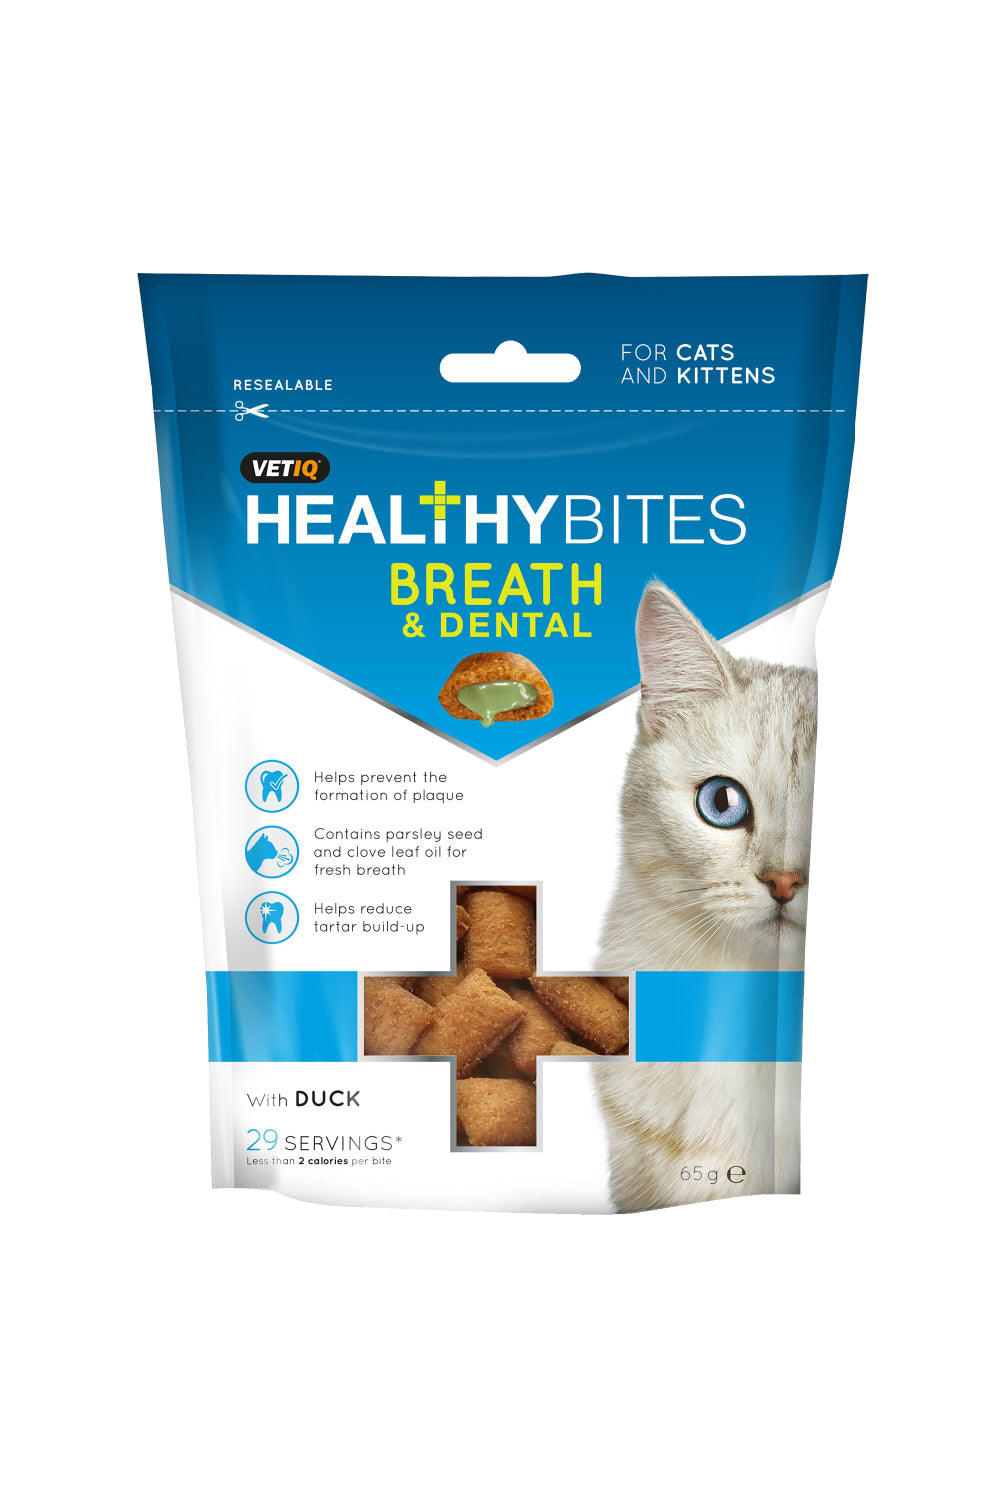 VetIQ Healthy Bites Breath & Dental For Cats & Kittens (May Vary) (2oz)